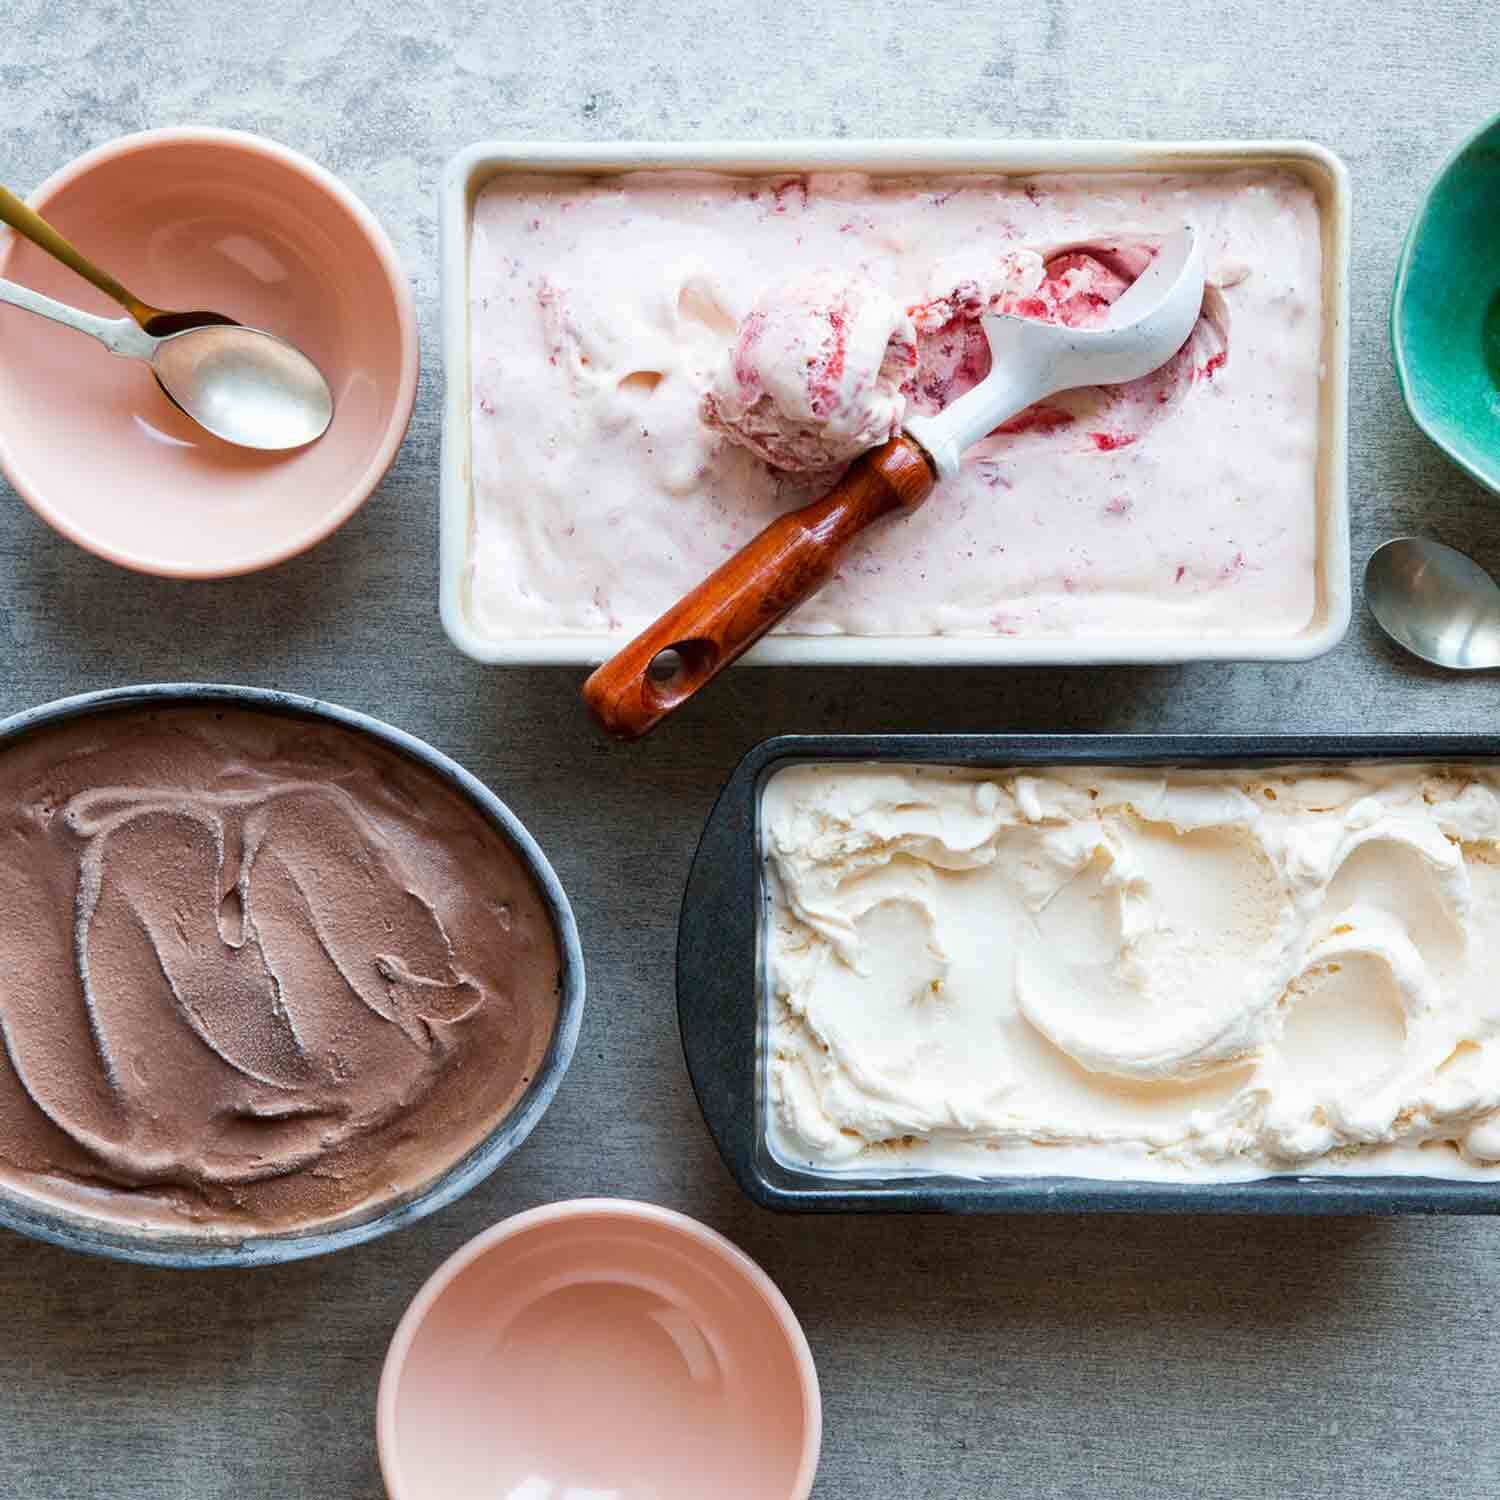 https://cdn.outsideonline.com/wp-content/uploads/2020/07/03/ice-cream-homemade-summer-recipe_s.jpg